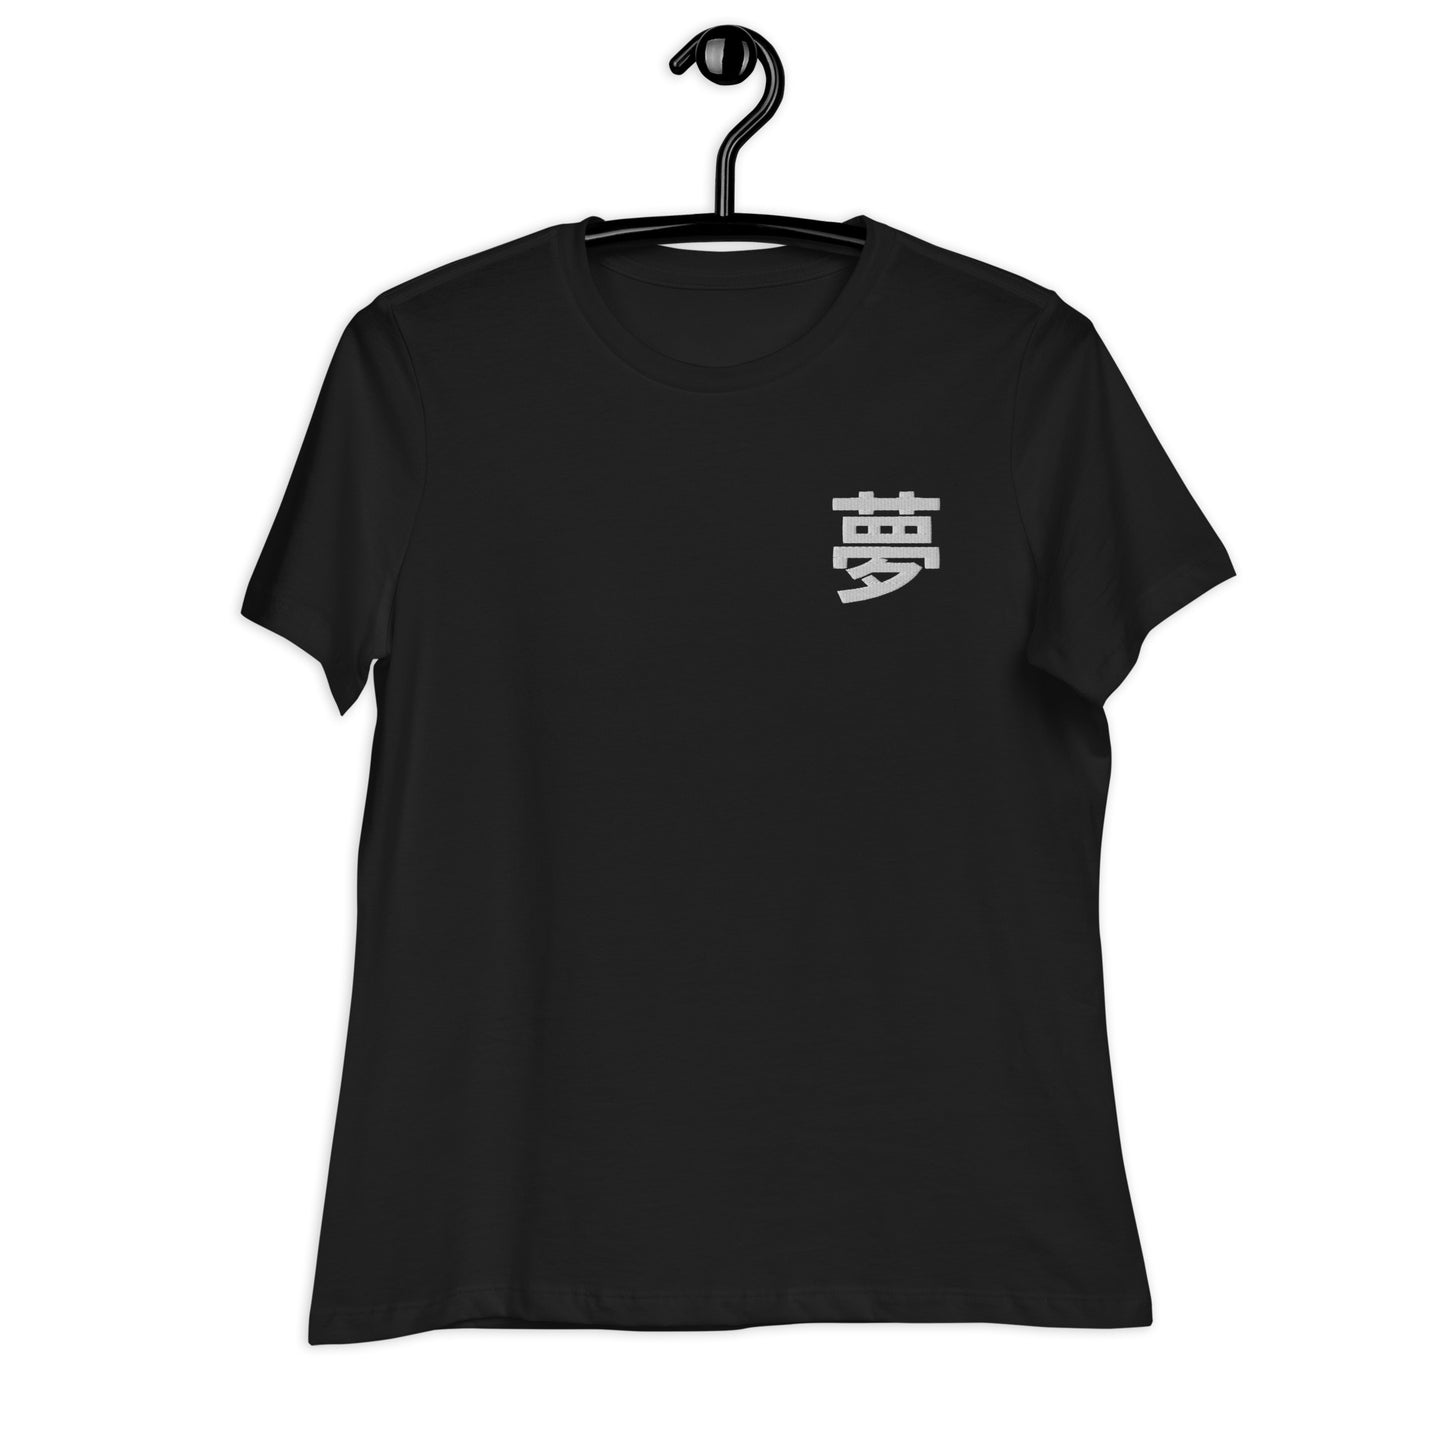 SUEÑOS - "Yume" Camiseta clásica mujer 